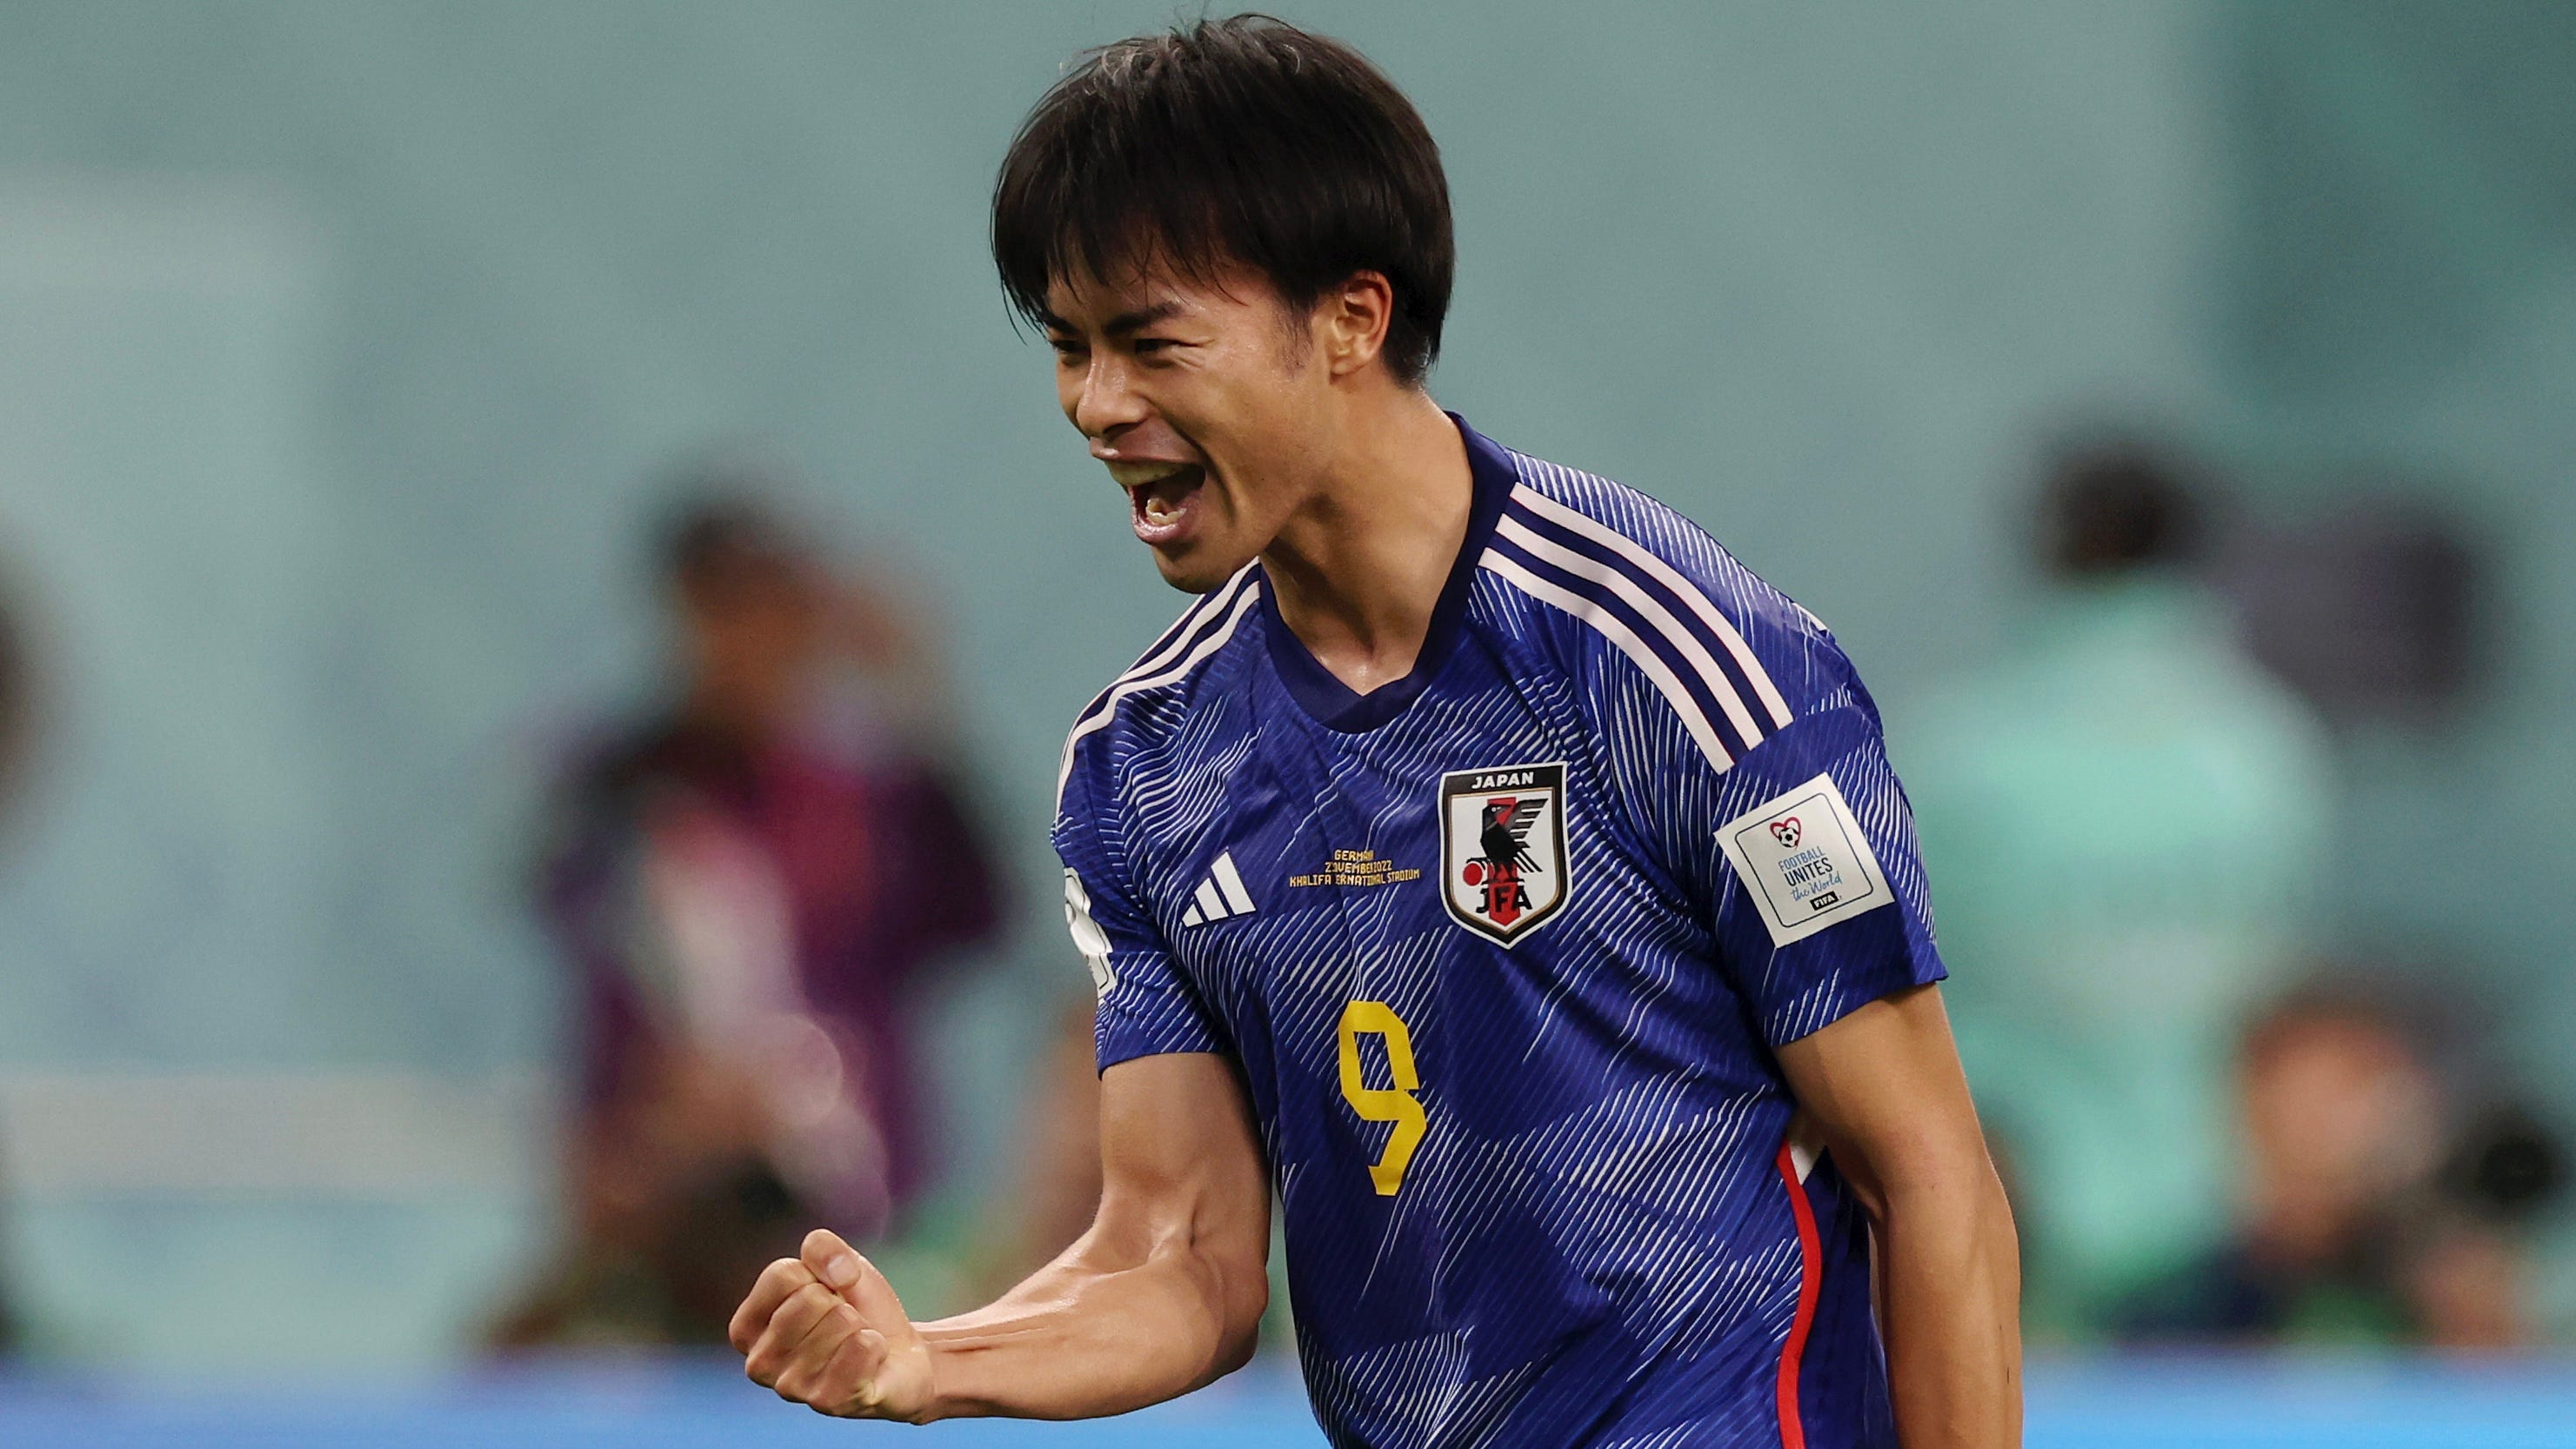 Ｓサイズサッカー 日本代表 ユニフォーム 三笘薫 背番号9 - ウェア